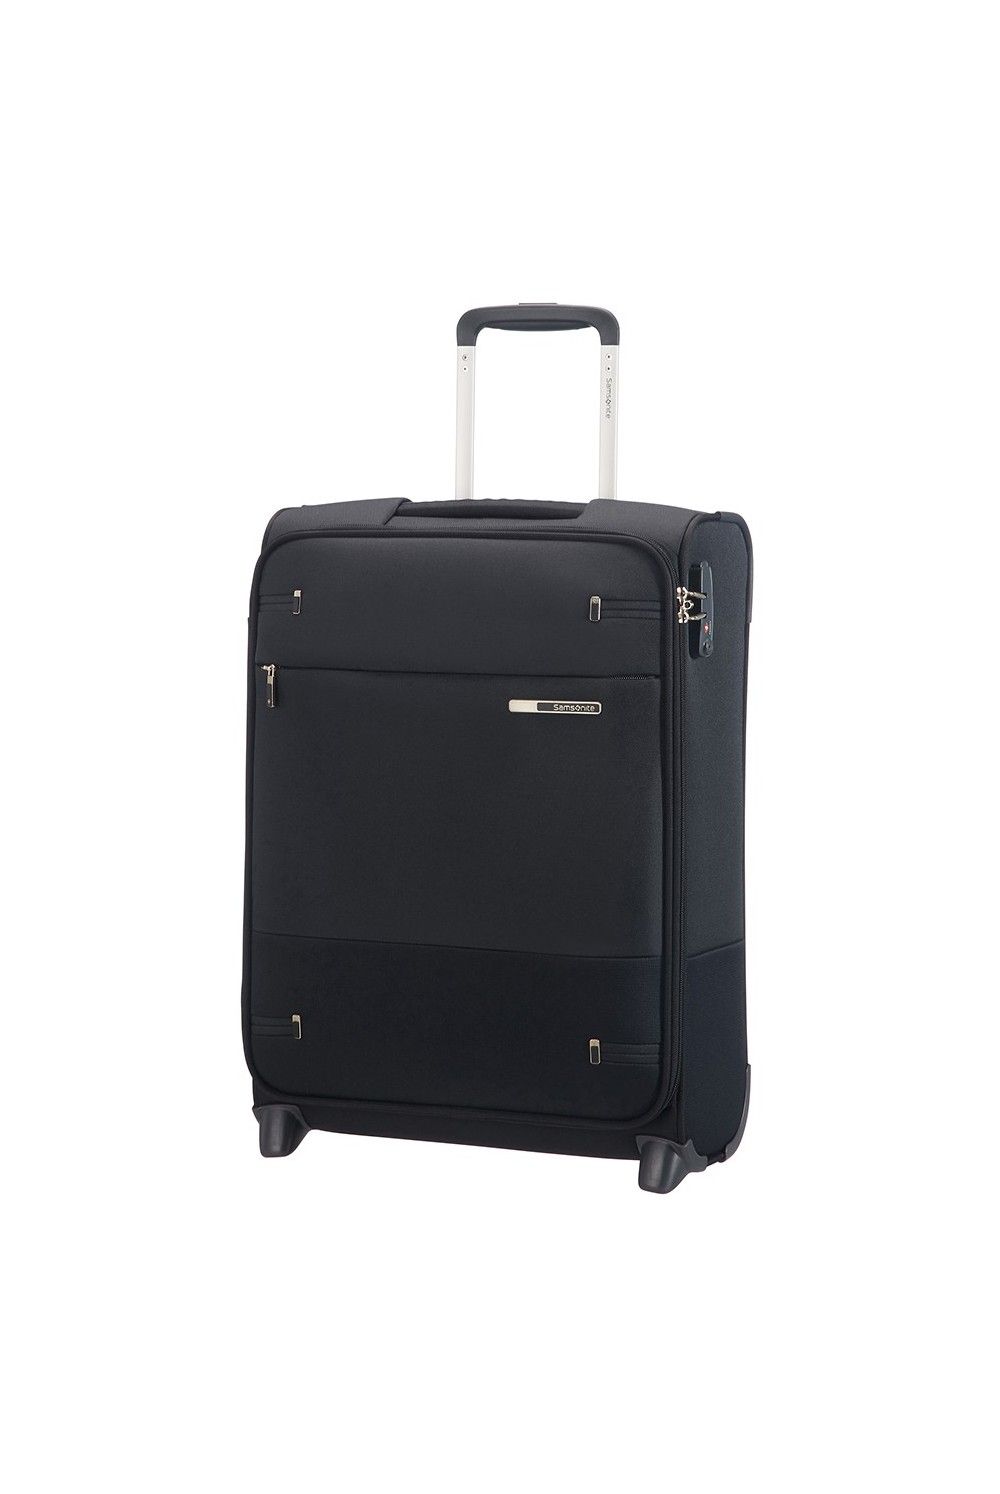 Samsonite Base Boost 55 2 wheel hand luggage